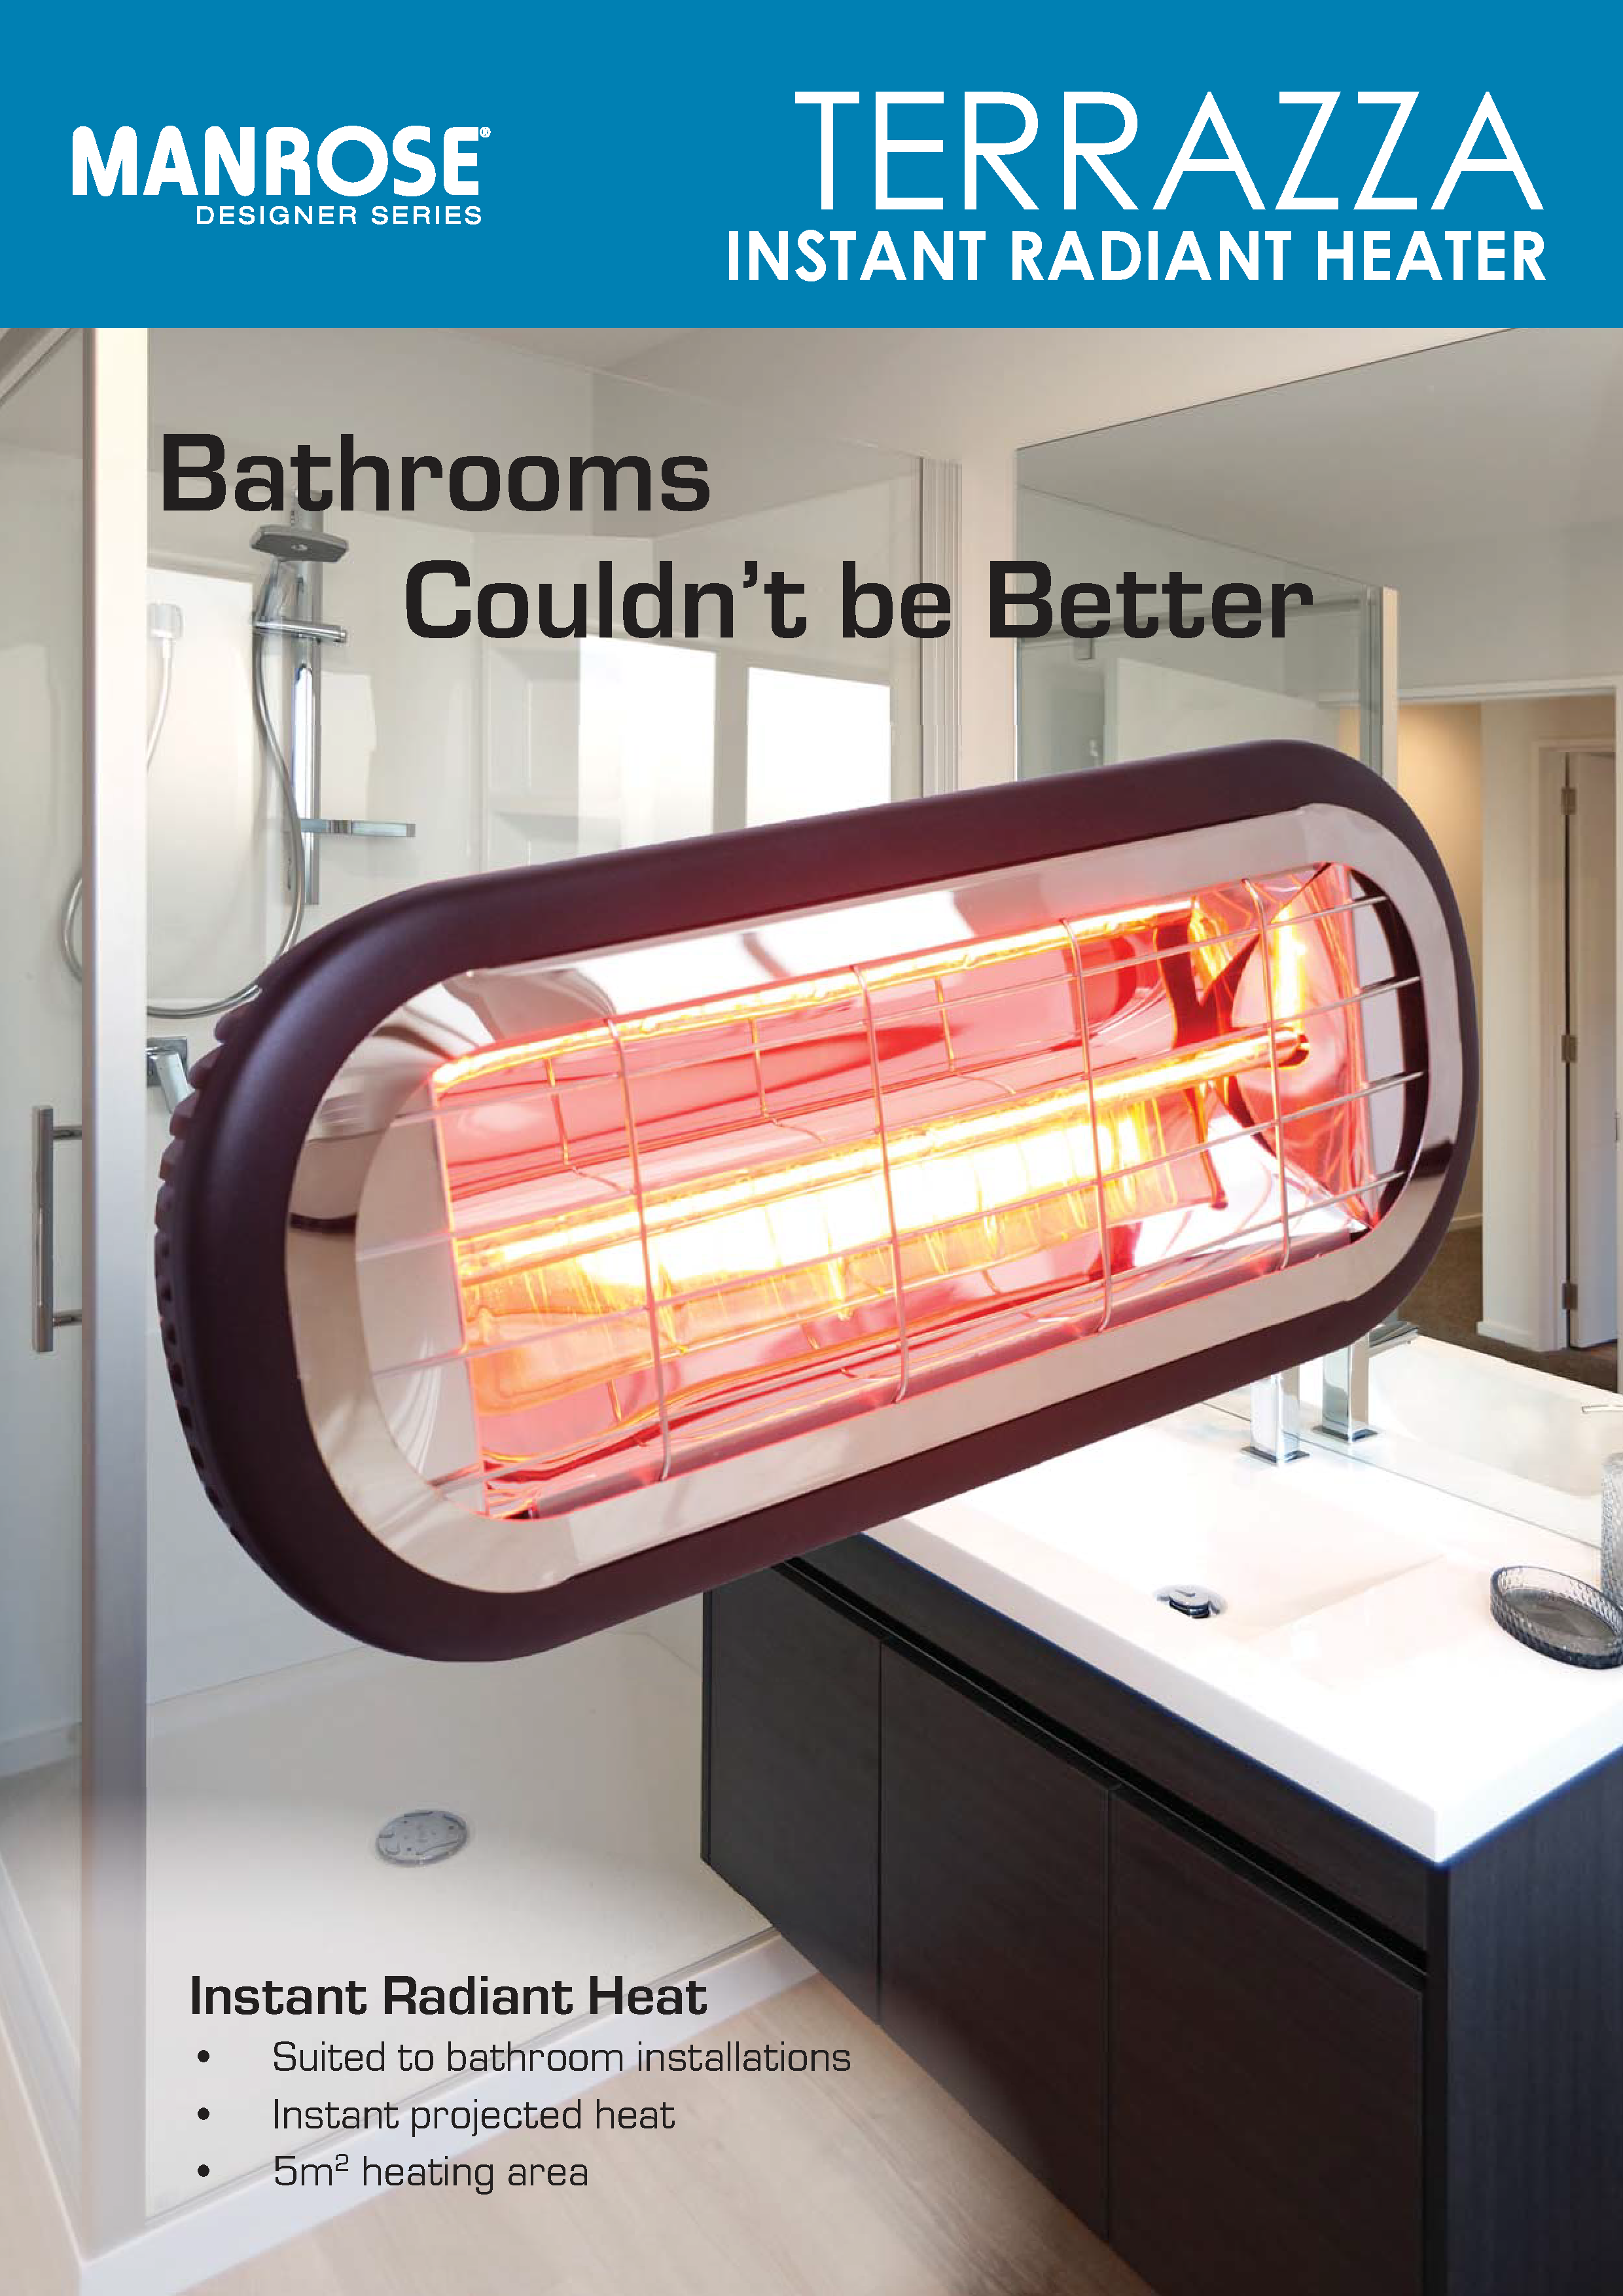 Terrazza Bathroom Radiant Heater